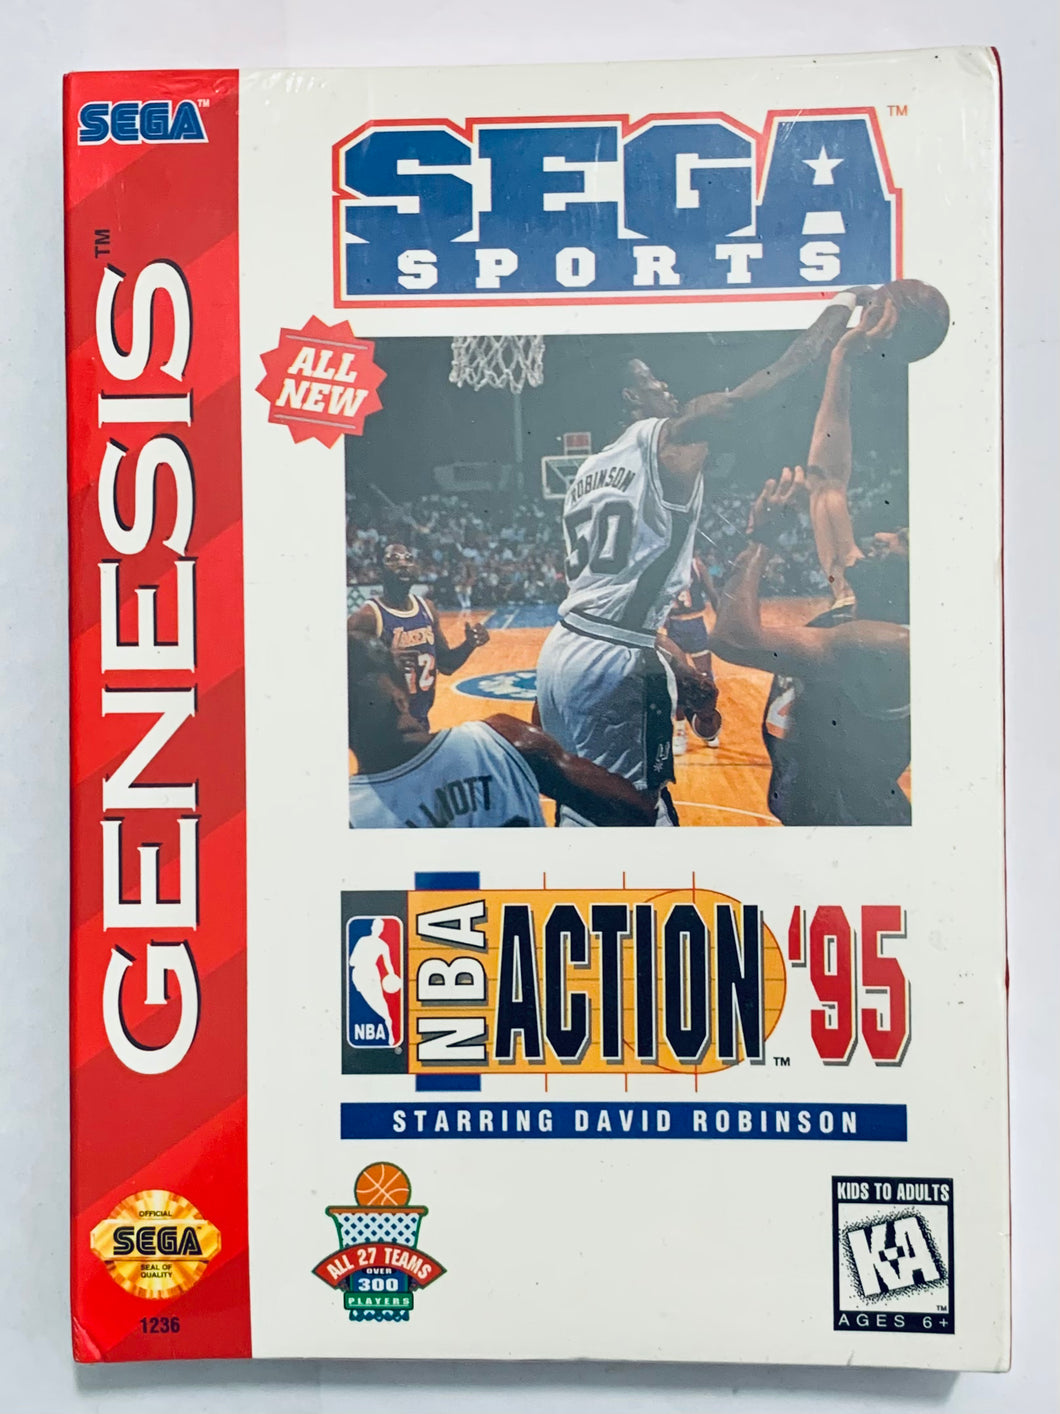 NBA Action '95 starring David Robinson - Sega Genesis - NTSC - Brand New (1236)